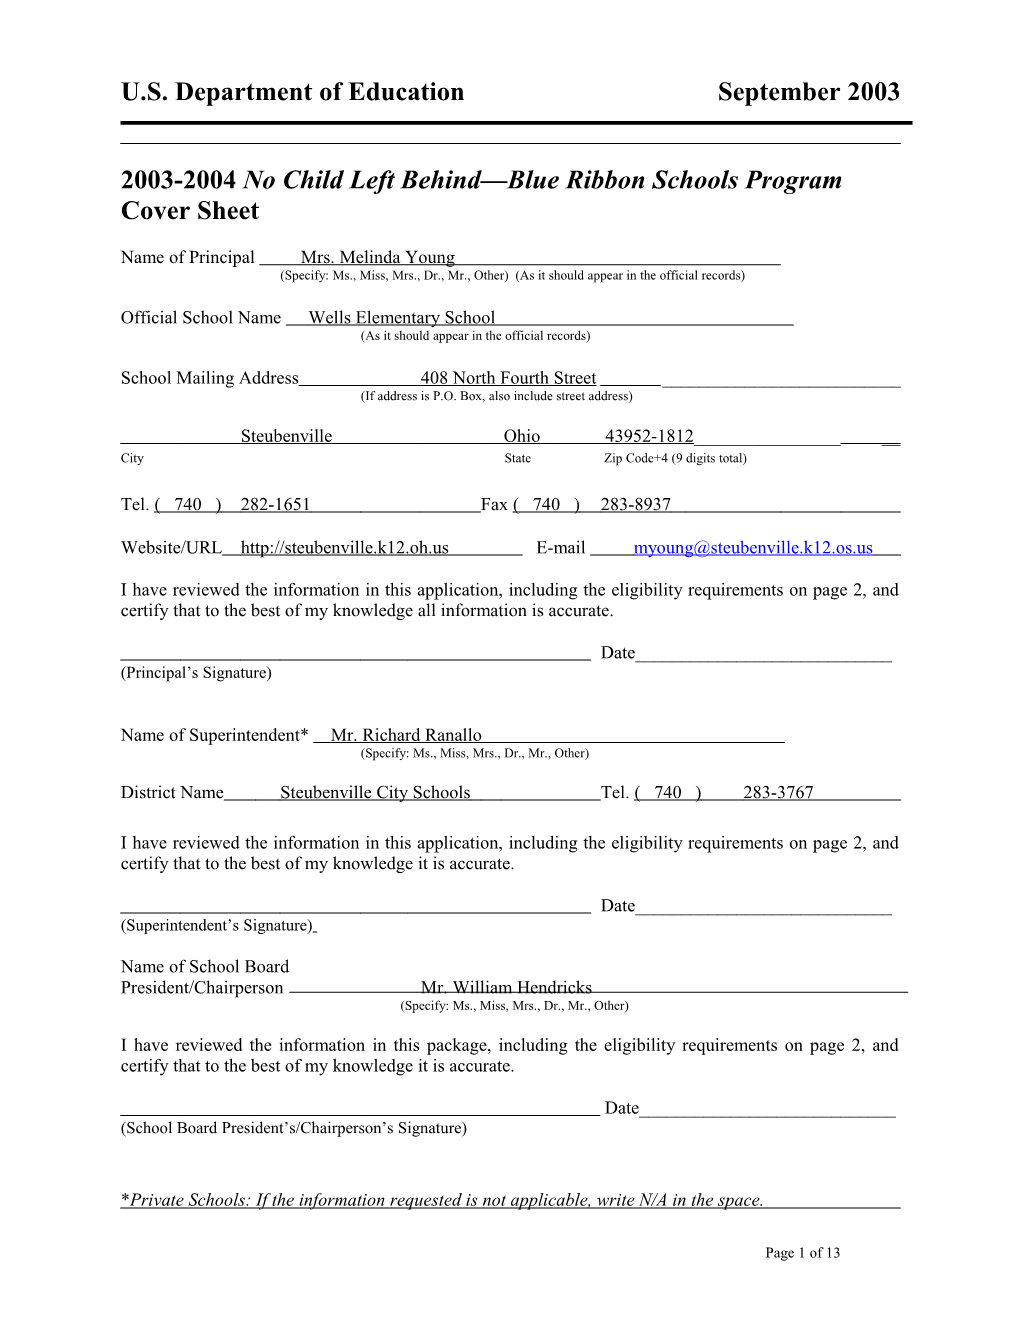 Wells Elementary School 2004 No Child Left Behind-Blue Ribbon School Application (Msword)